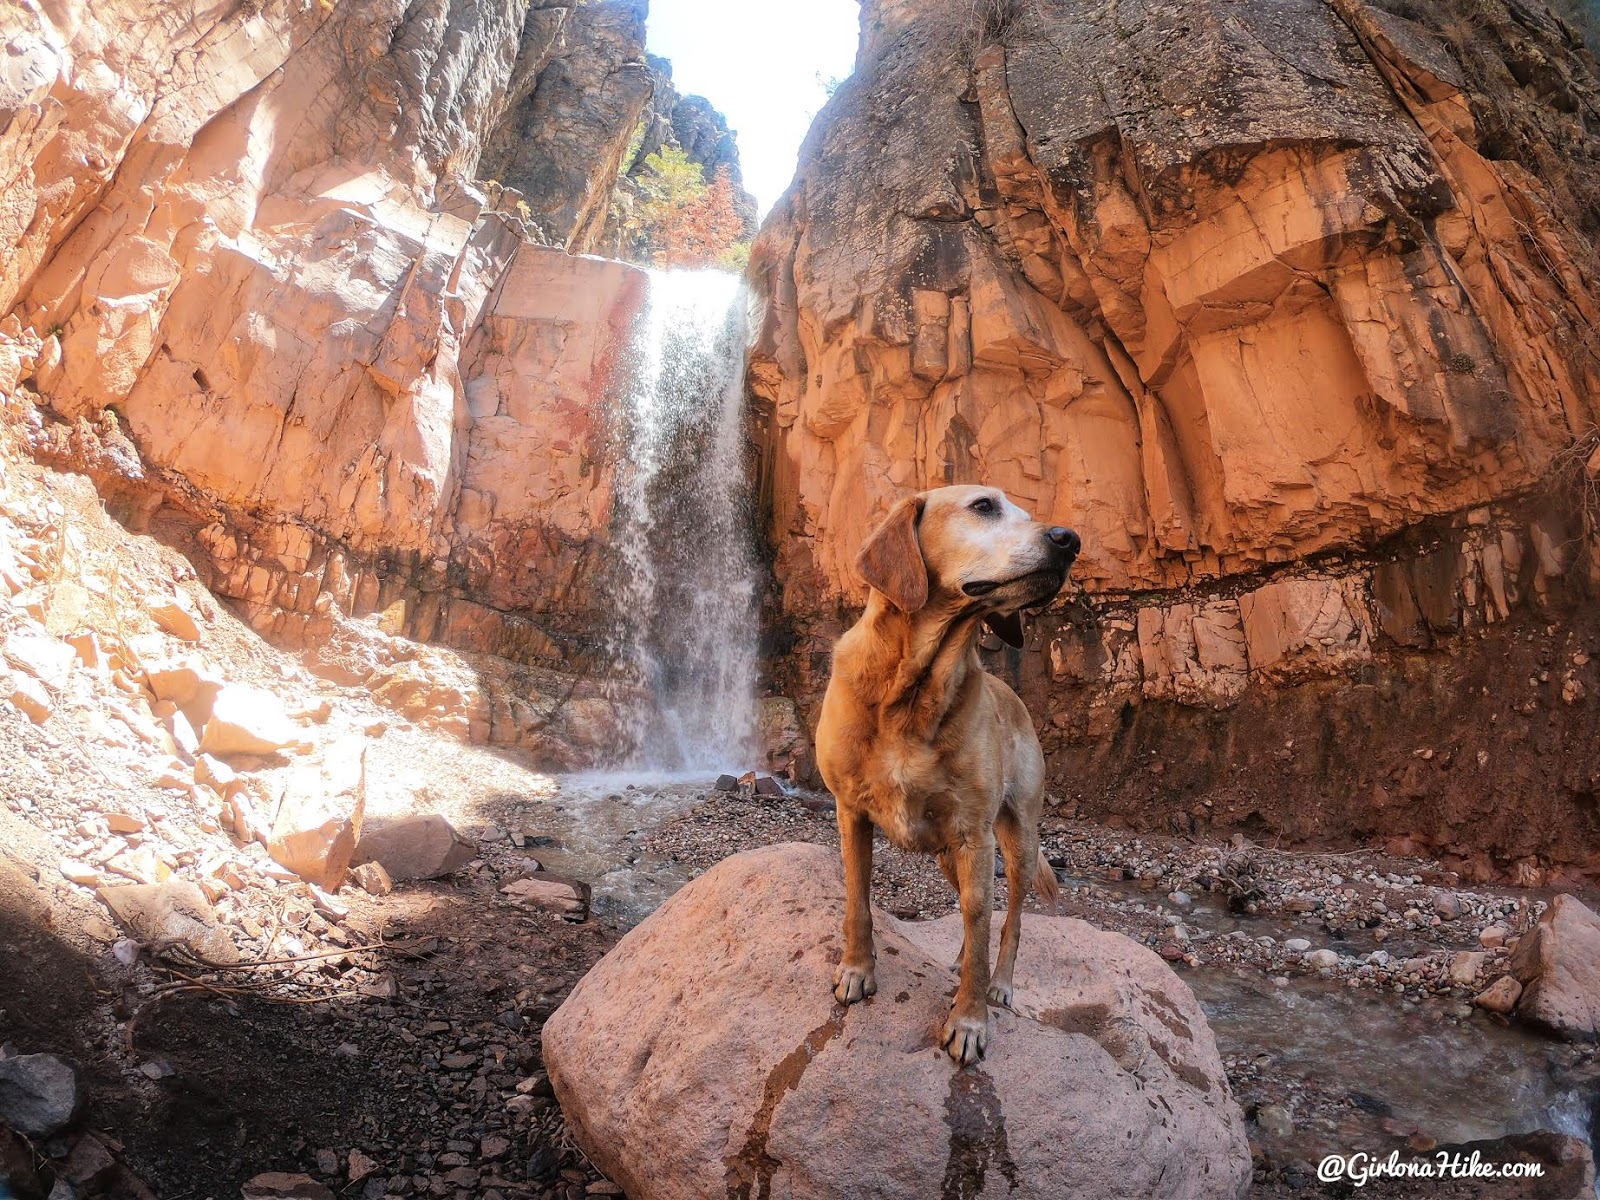 Hiking to the Hidden Haven Waterfall, Parowan, Utah waterfall, Brian Head waterfall, waterfalls in utah, waterfalls in southern utah, dog friendly utah waterfalls